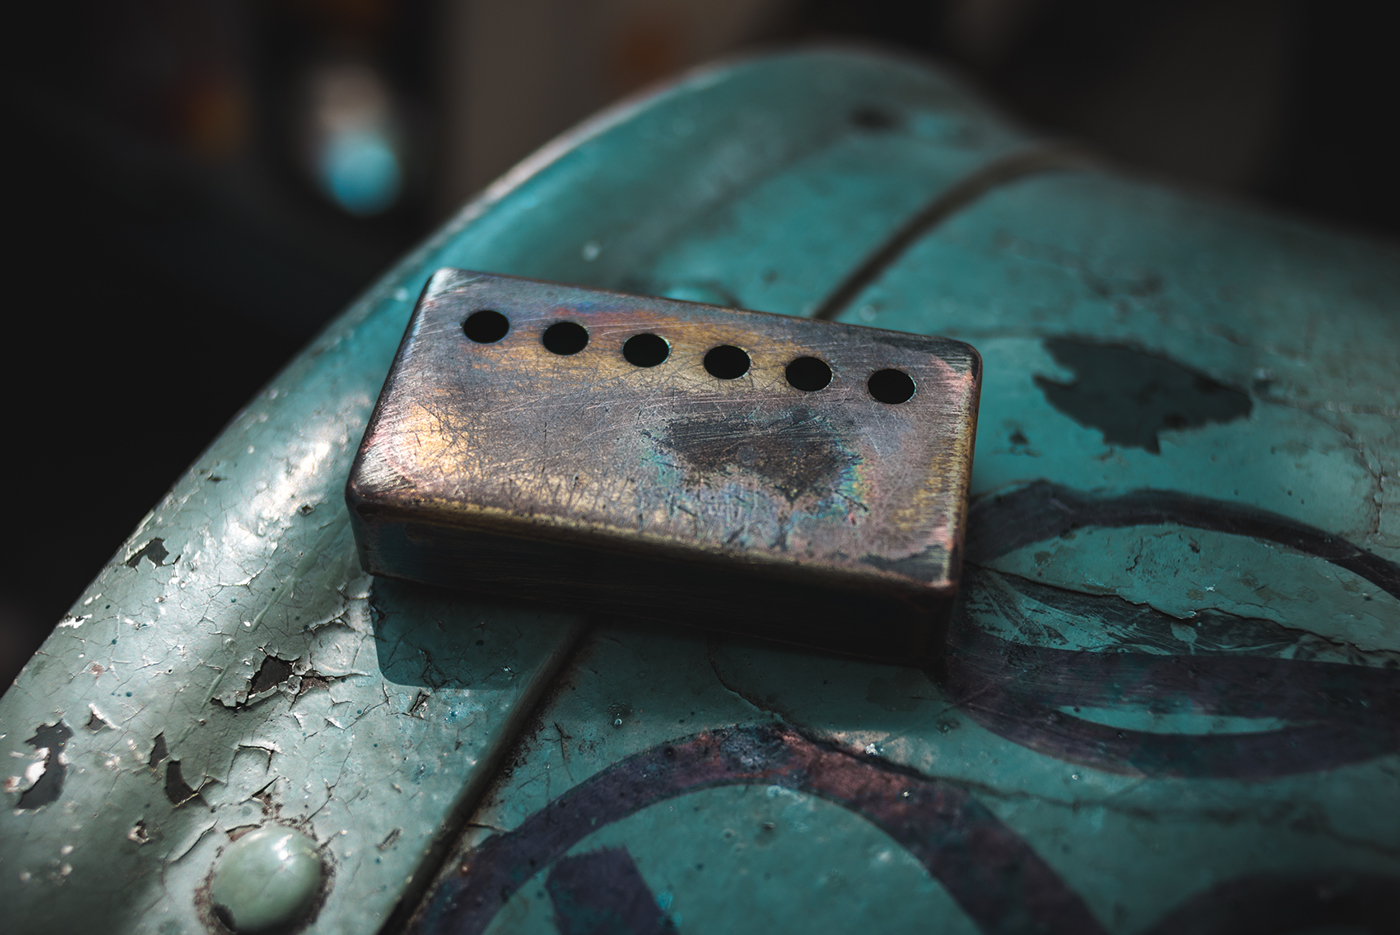 Seymour Duncan rkt pickups guitar DIY Custom rust acid fire